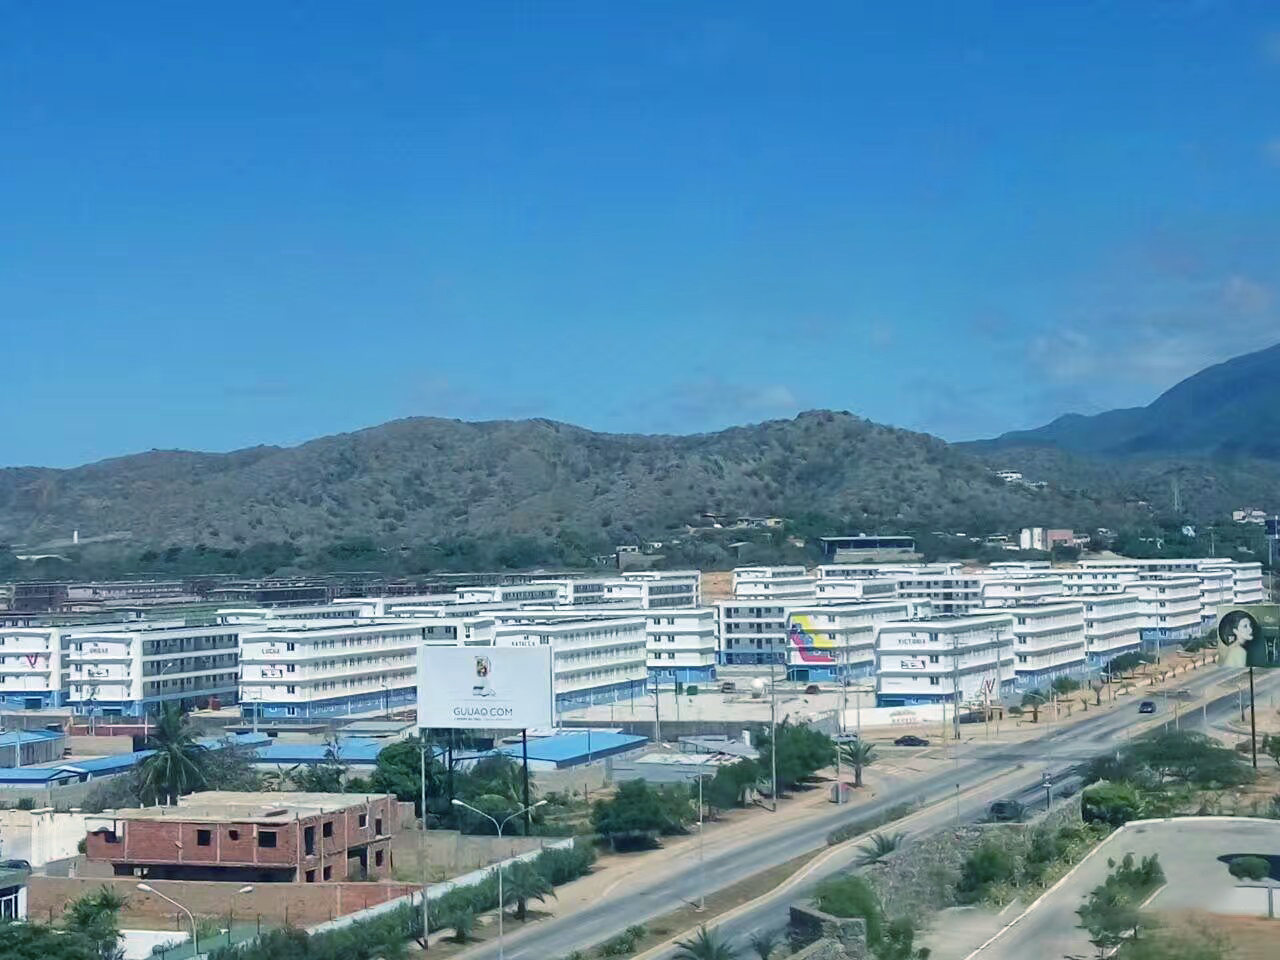 Bolamar Housing project in Marinho, Venezuela